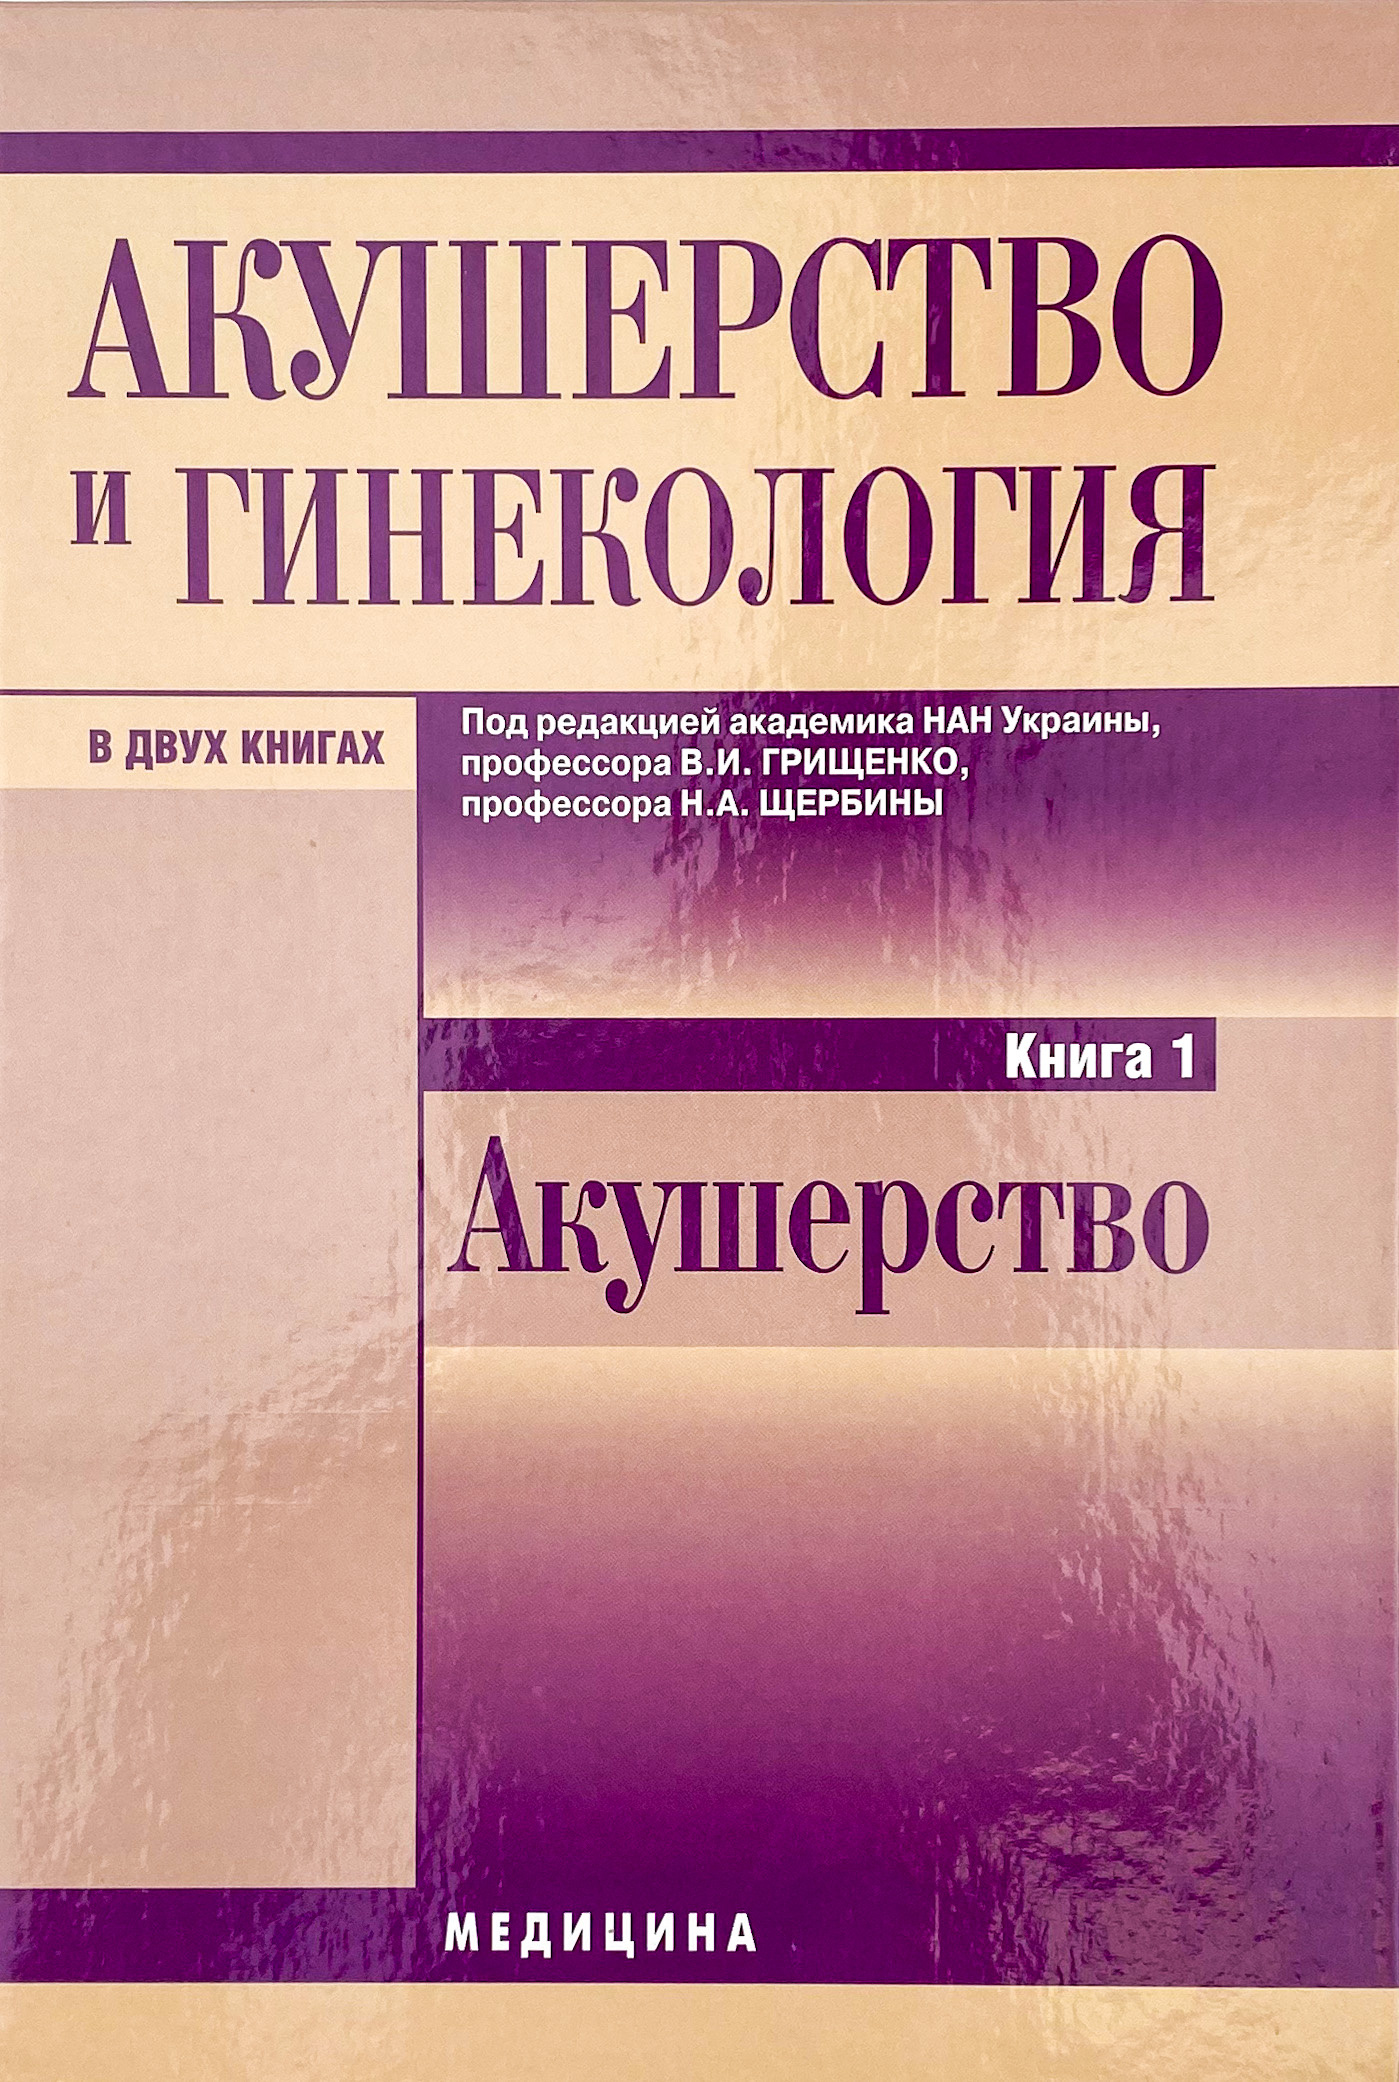 Акушерство и гинекология. Книга 1. Автор — Валентин Грищенко. 